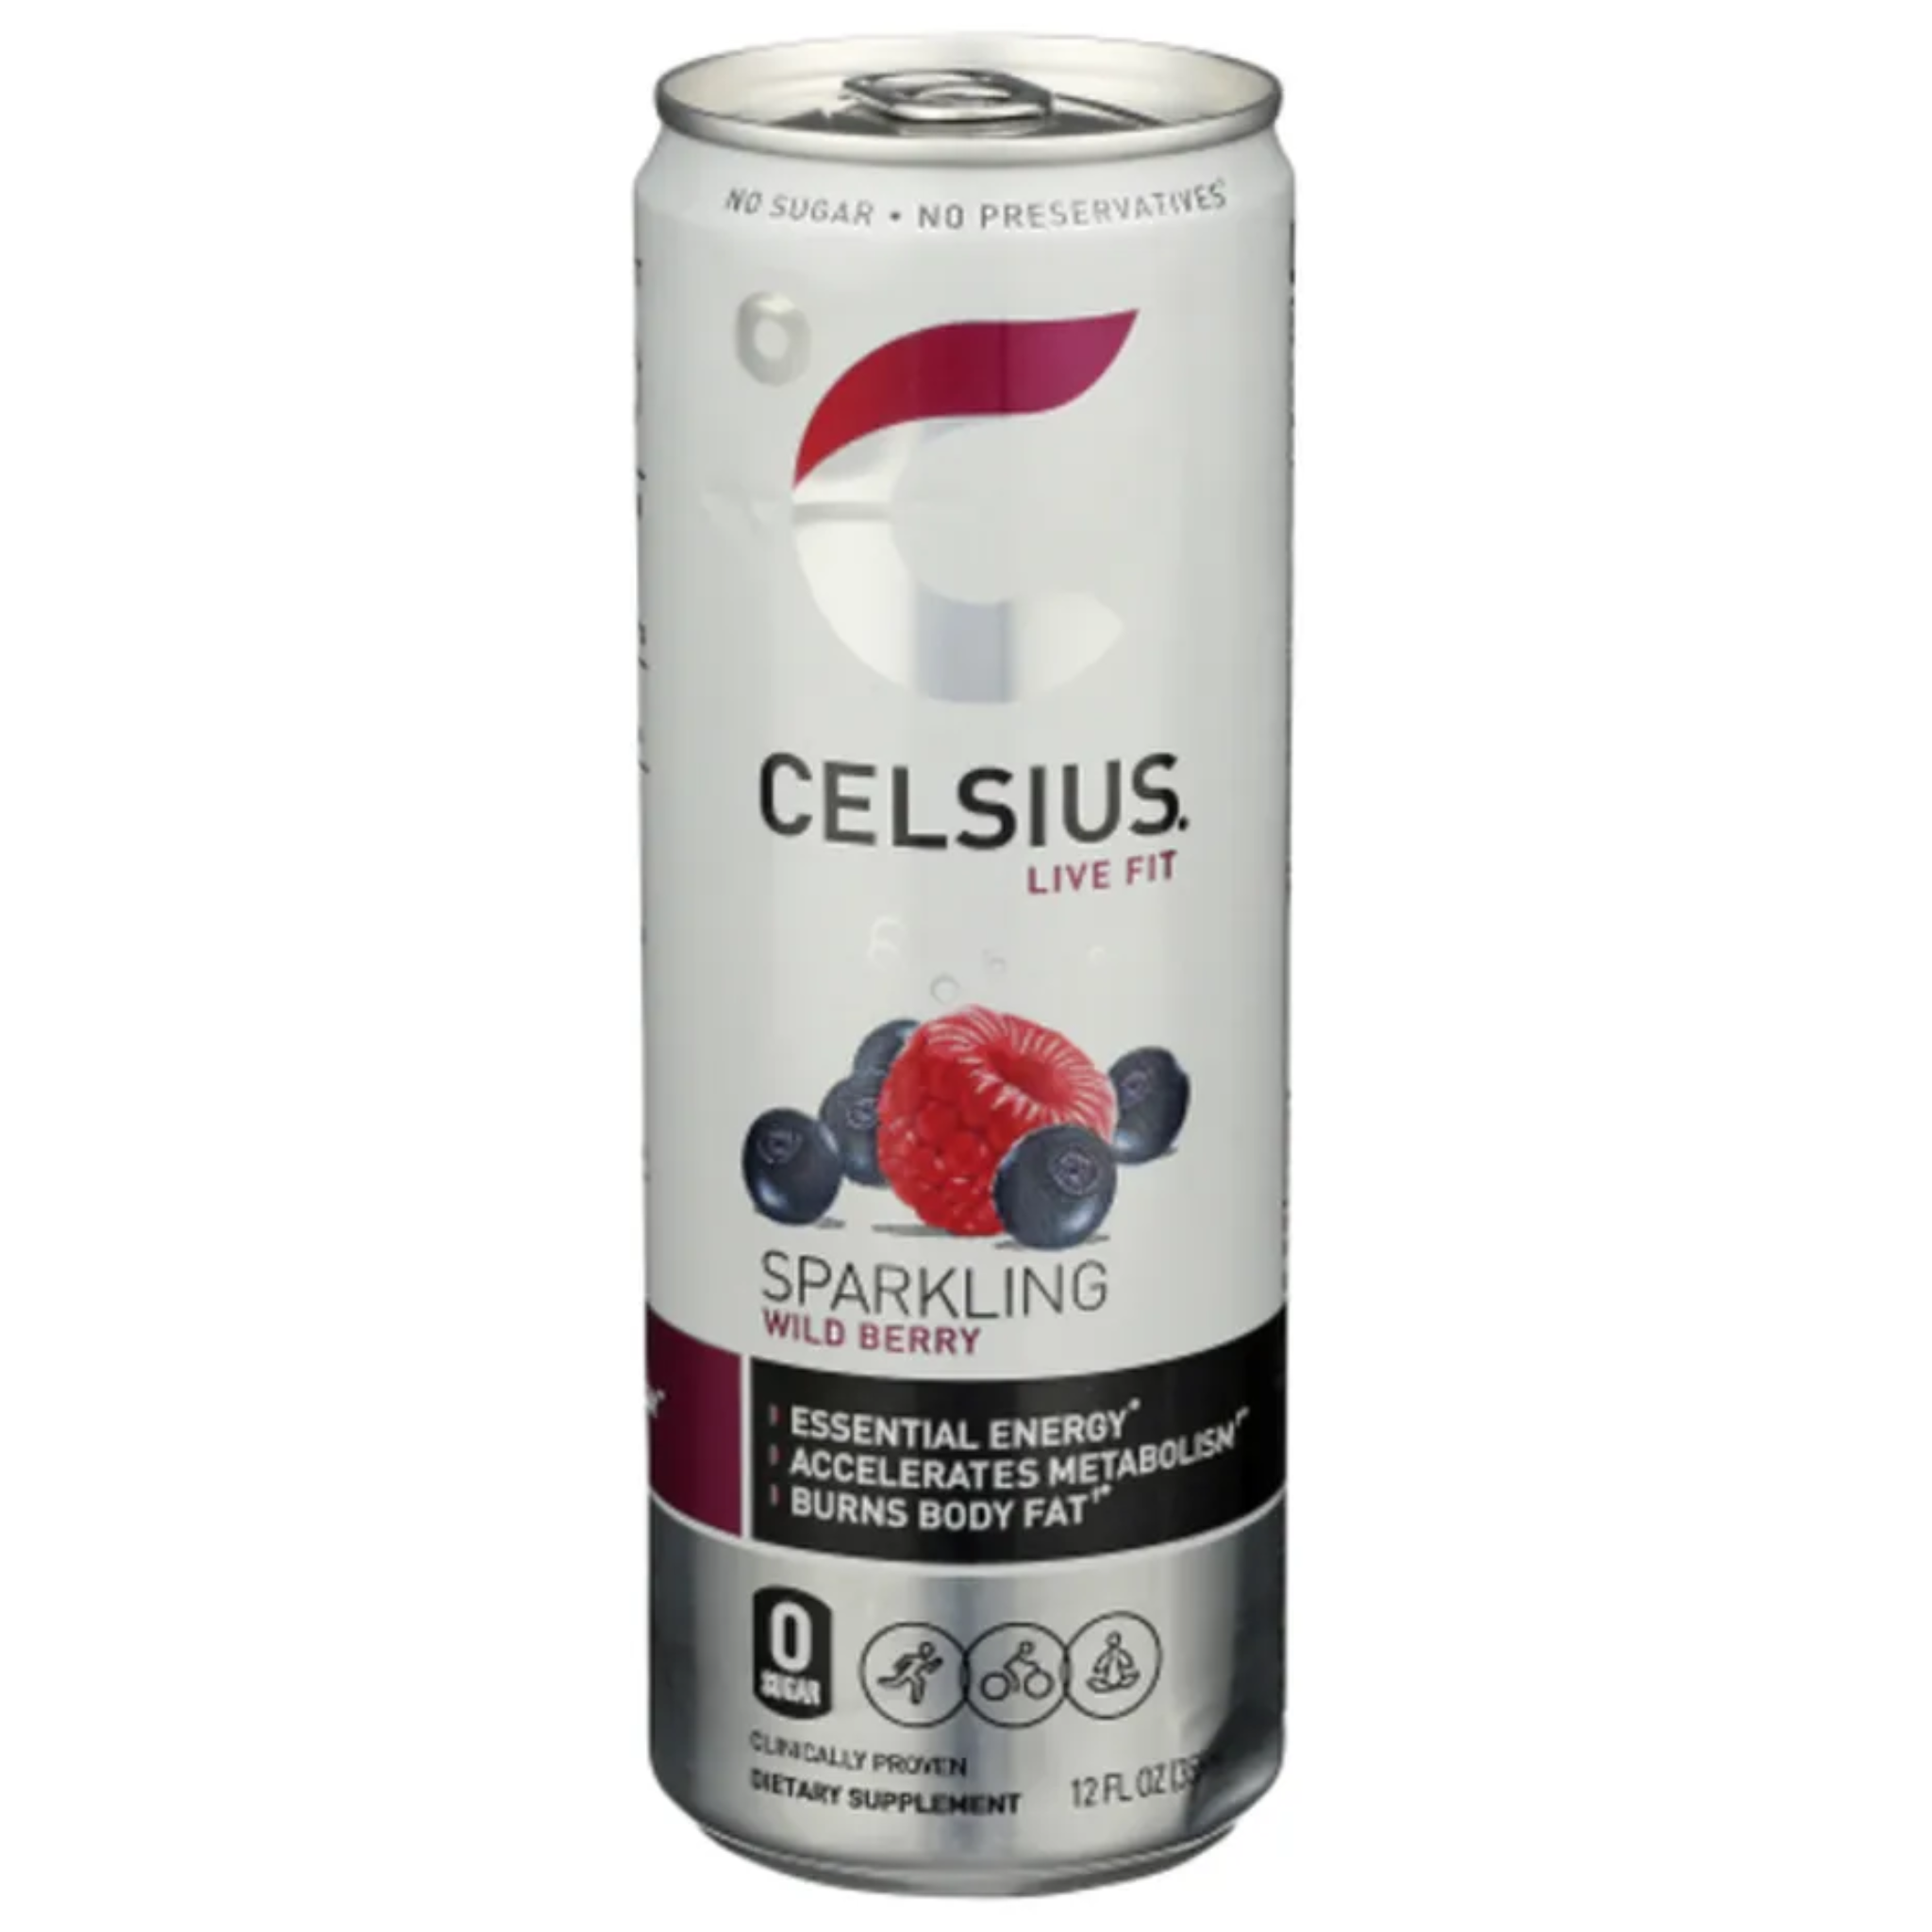 Celsius Sparkling Wild Berry